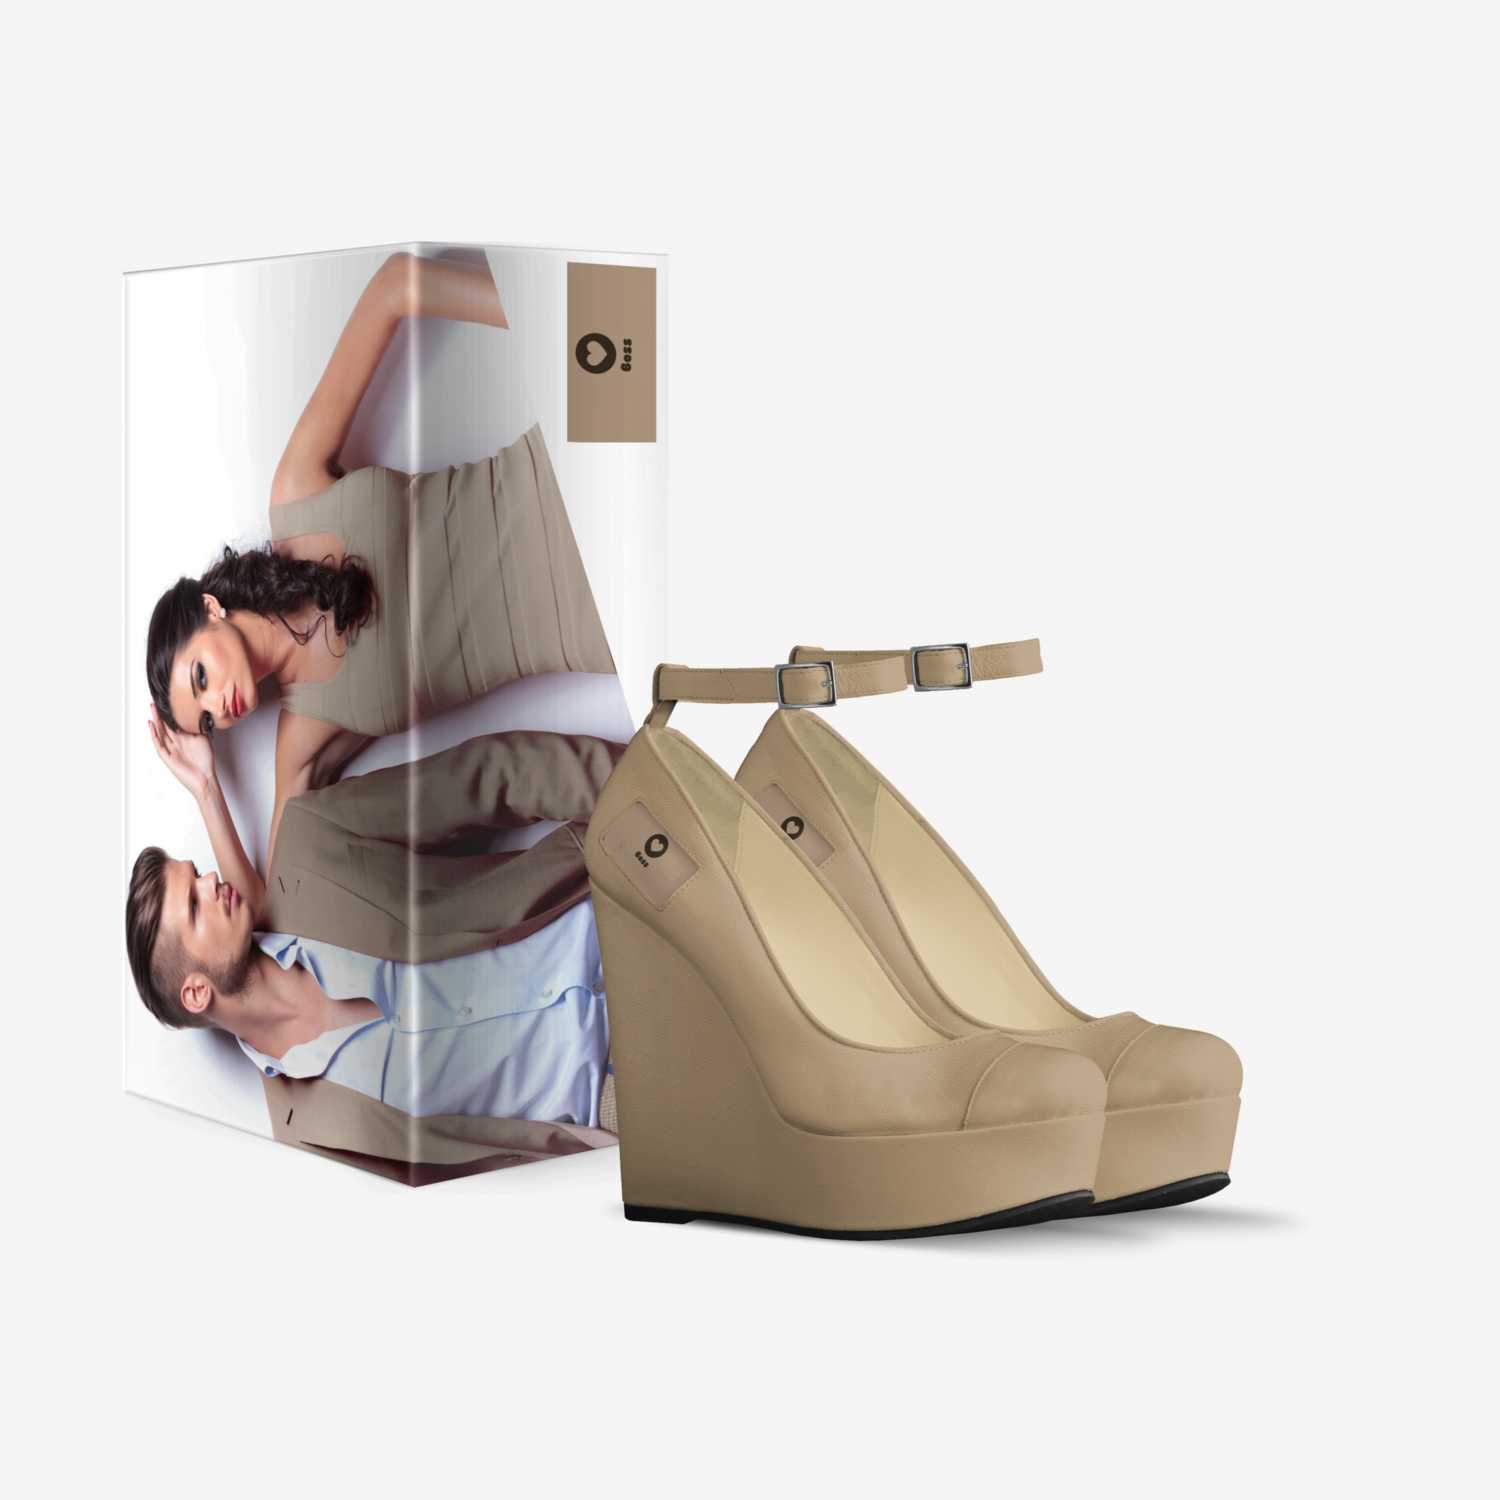 Boss custom made in Italy shoes by Kiara | Box view